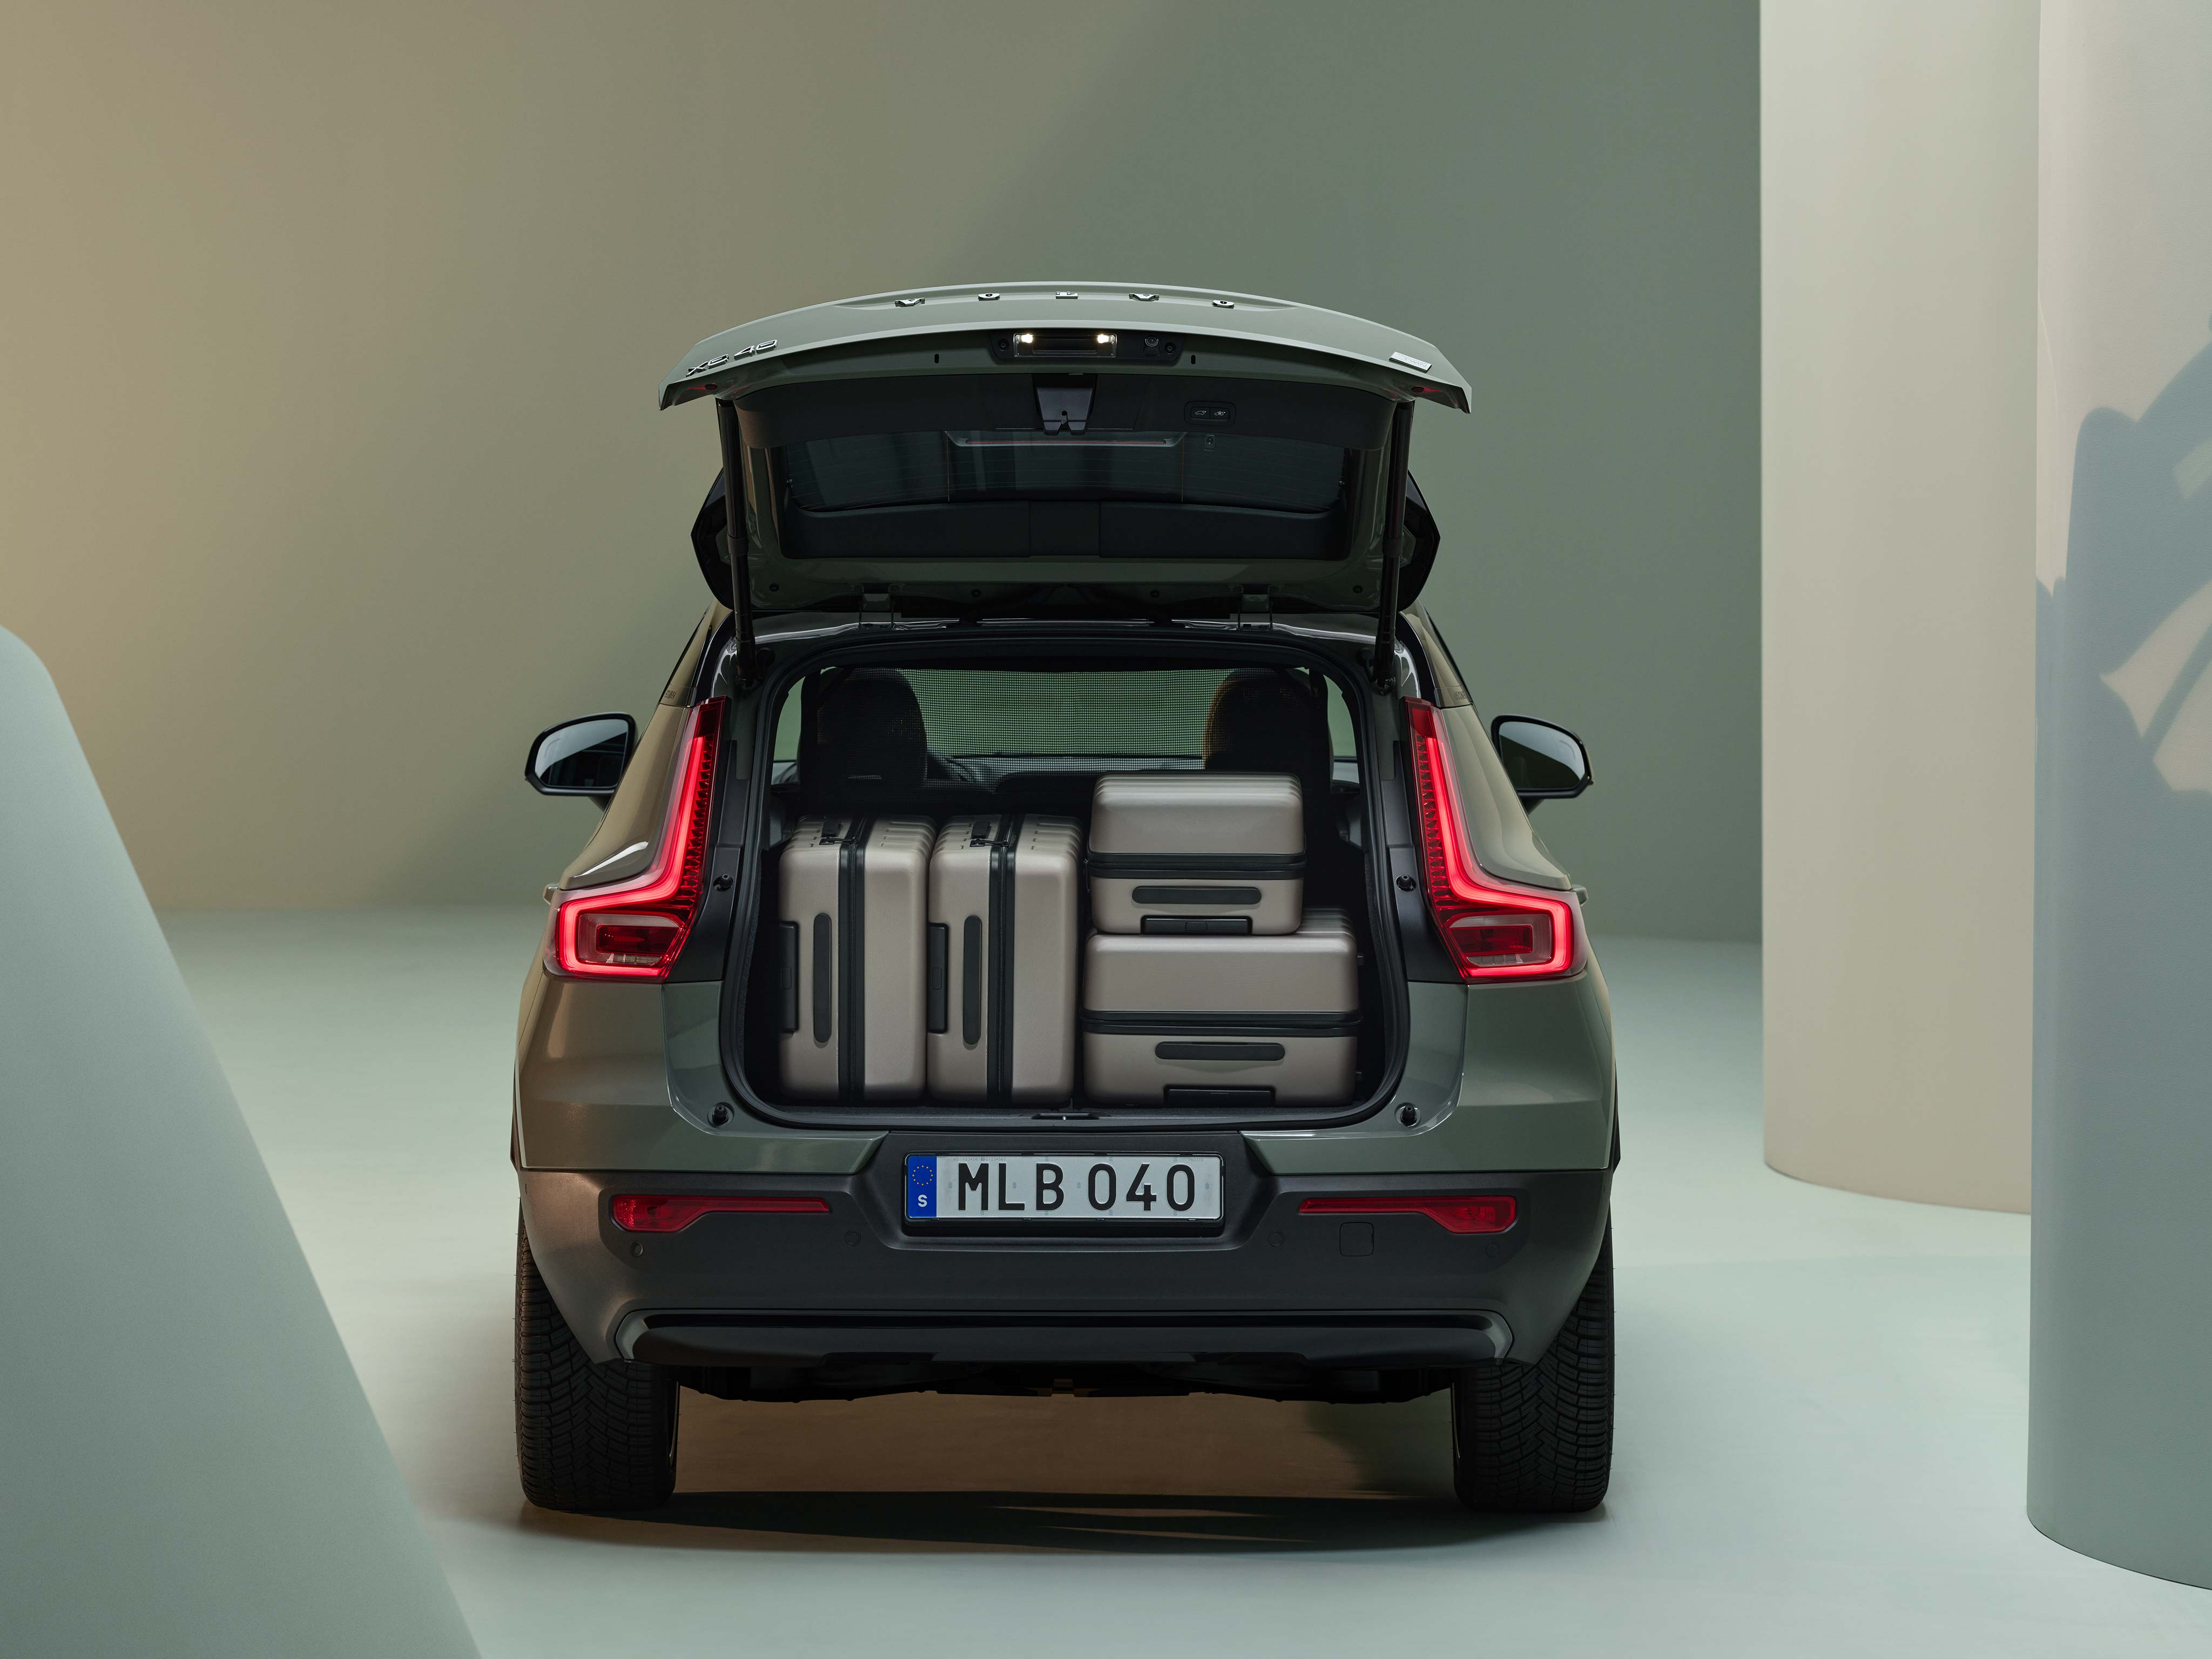 Bagfra ses et stort bagagerum i en Volvo SUV med flere store kasser.